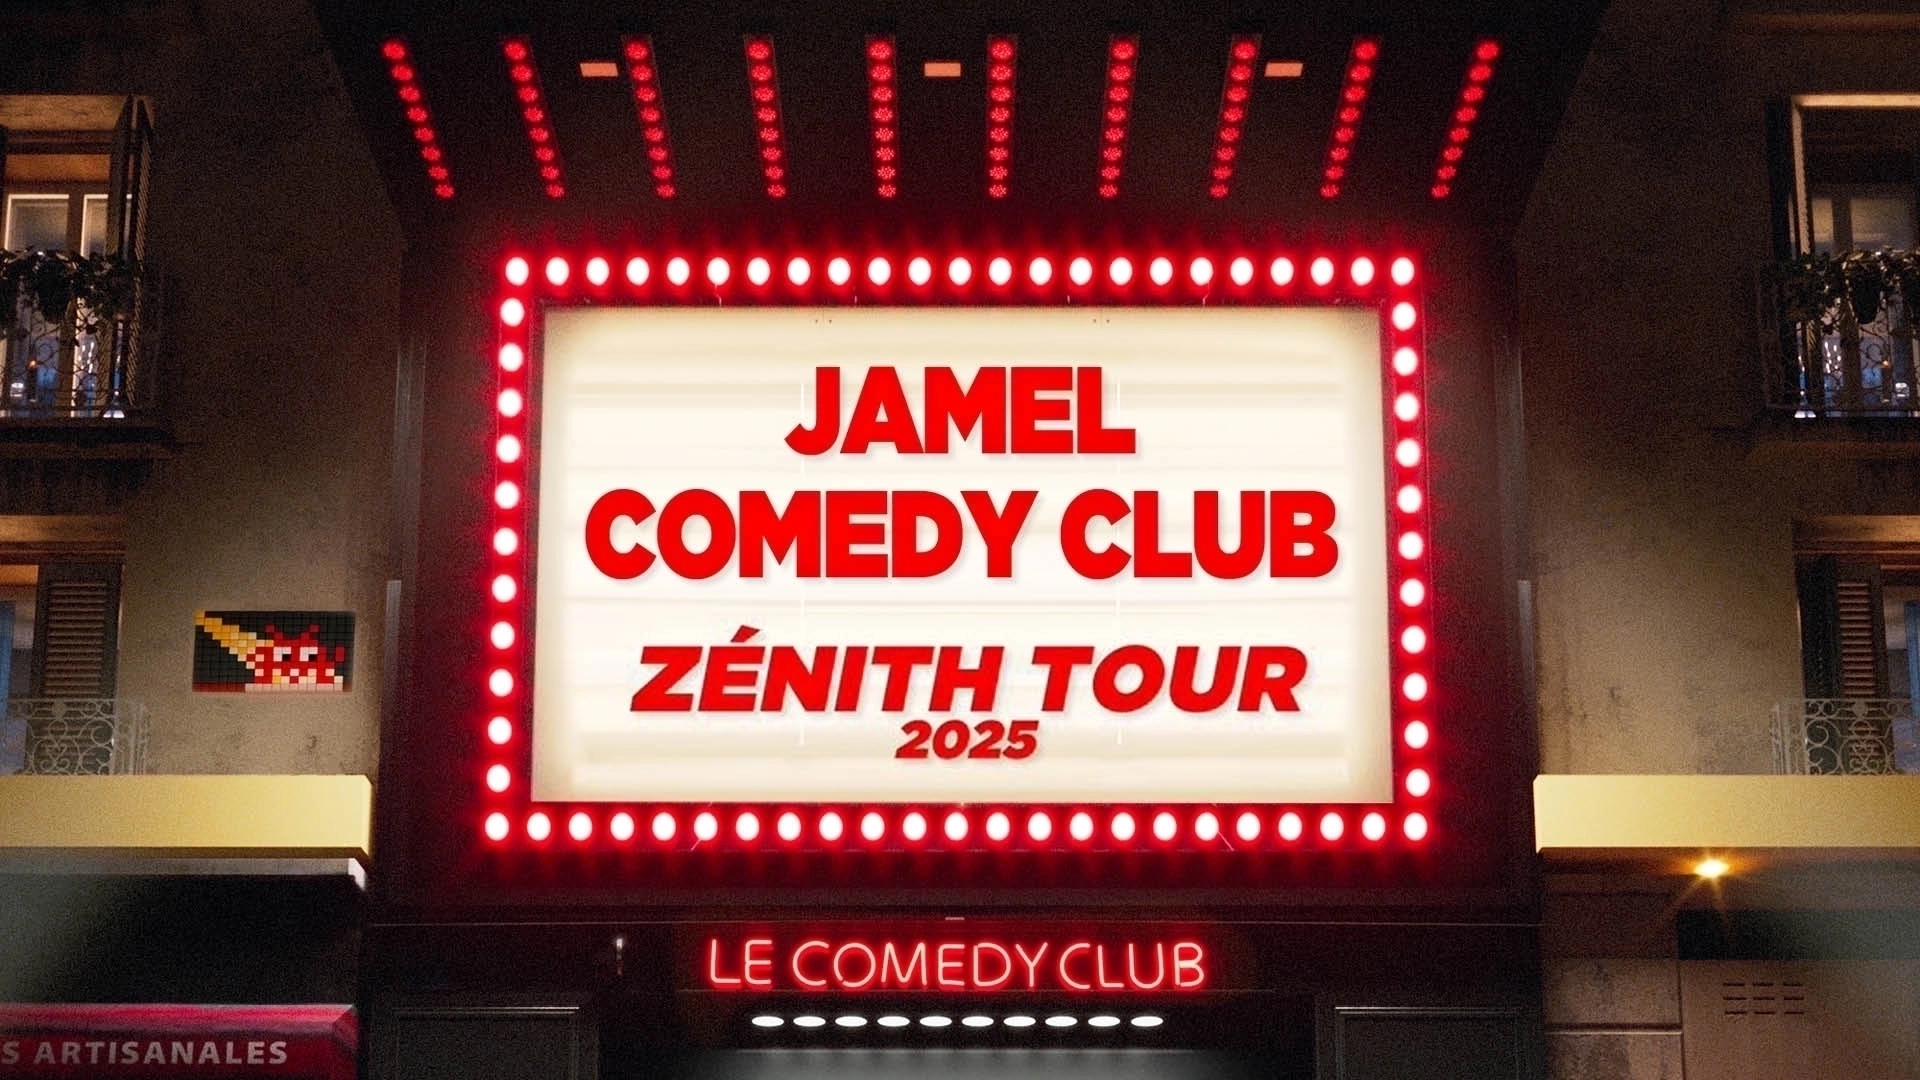 Jamel Comedy Club Zenith Tour 2025 al Arena Futuroscope Tickets